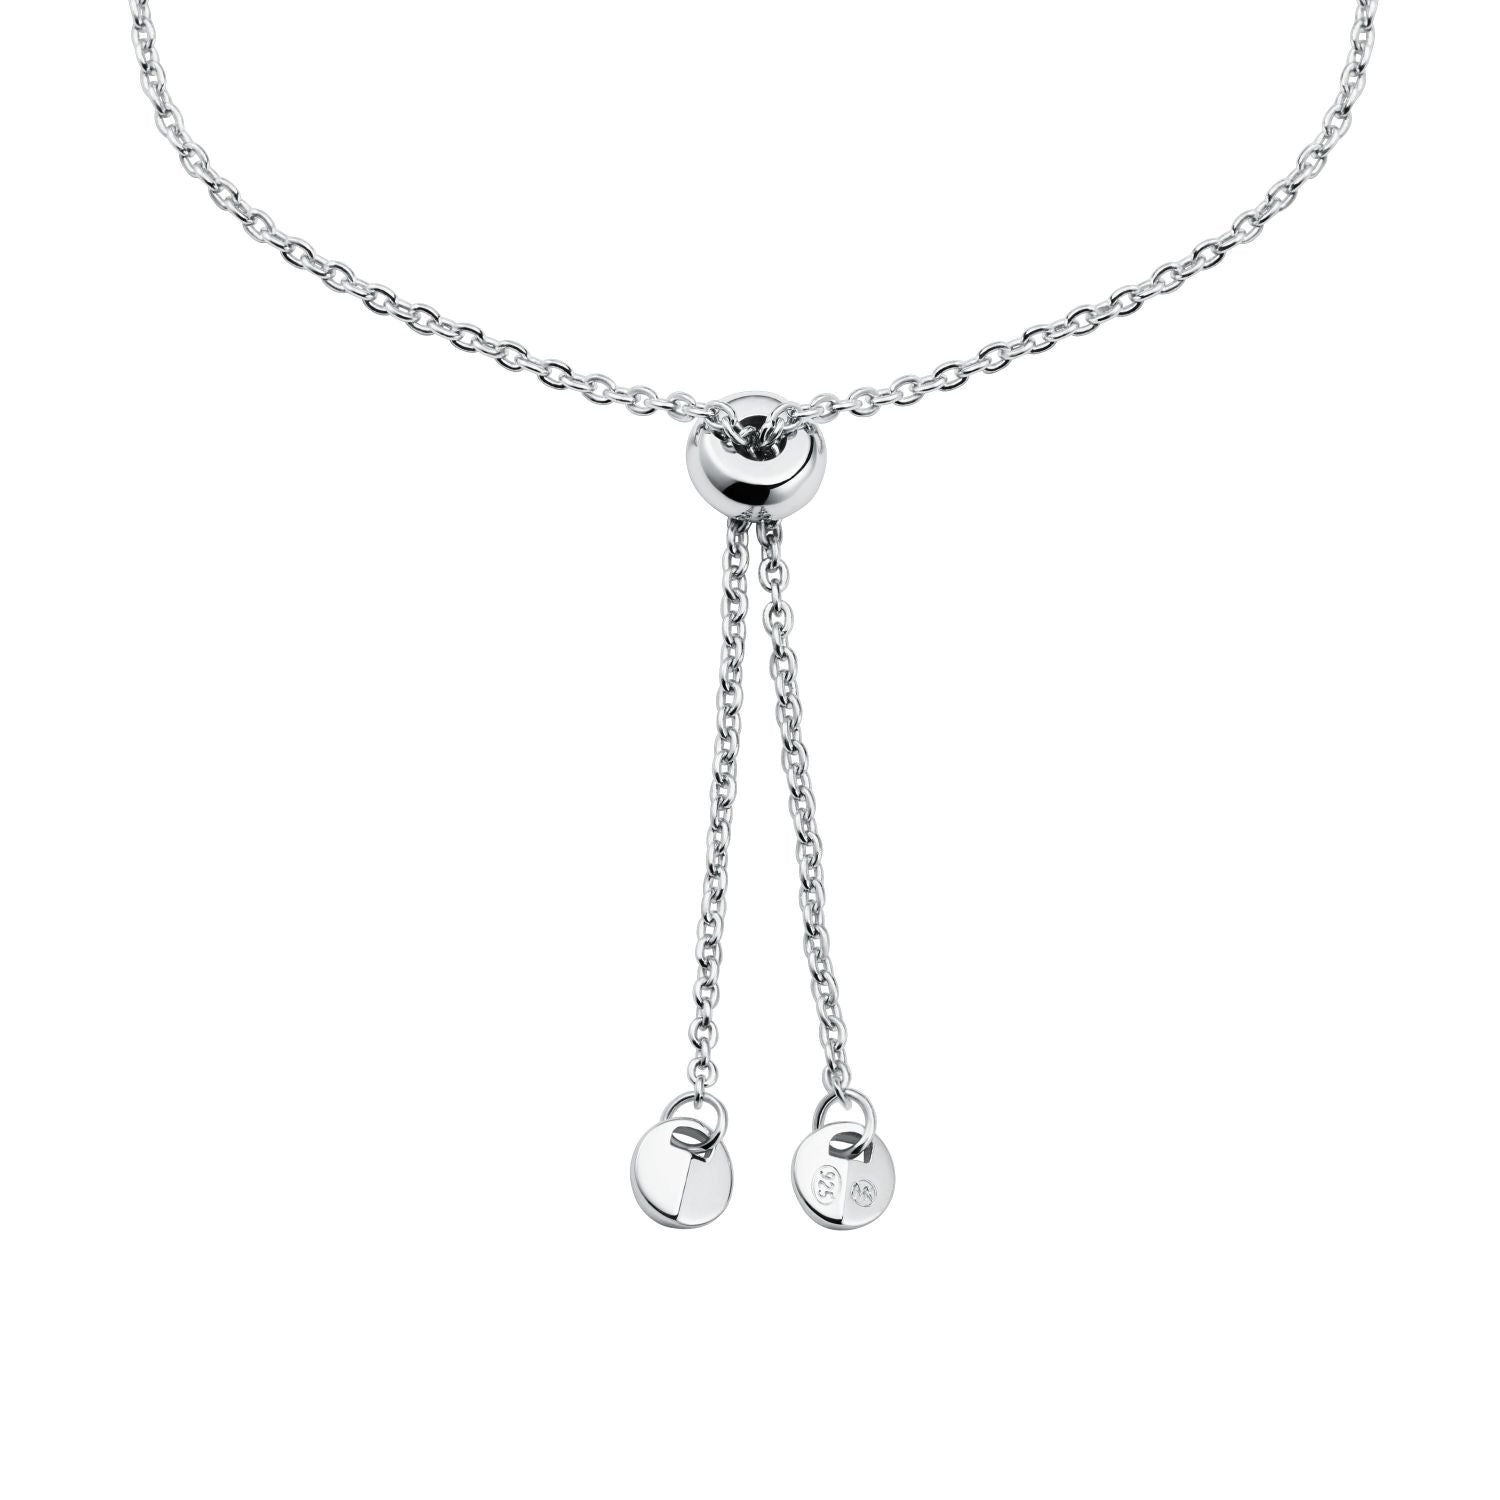 Michael Kors MKC1514AN040 Platinum Plated Silver Premium Bracelet